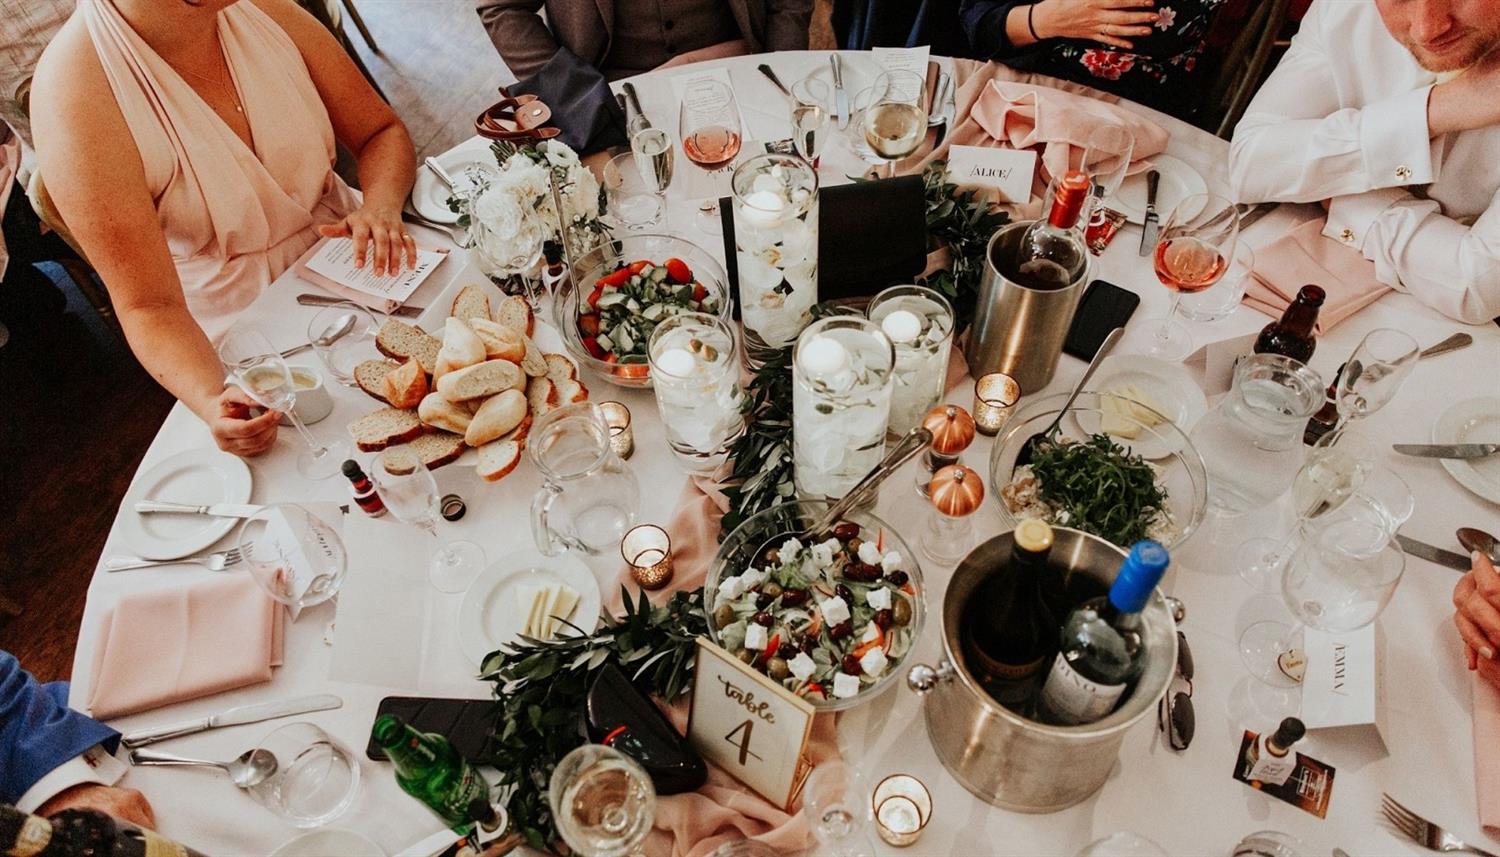 Wedding breakfast table. Photo Credit: Oxana Mazur Photography